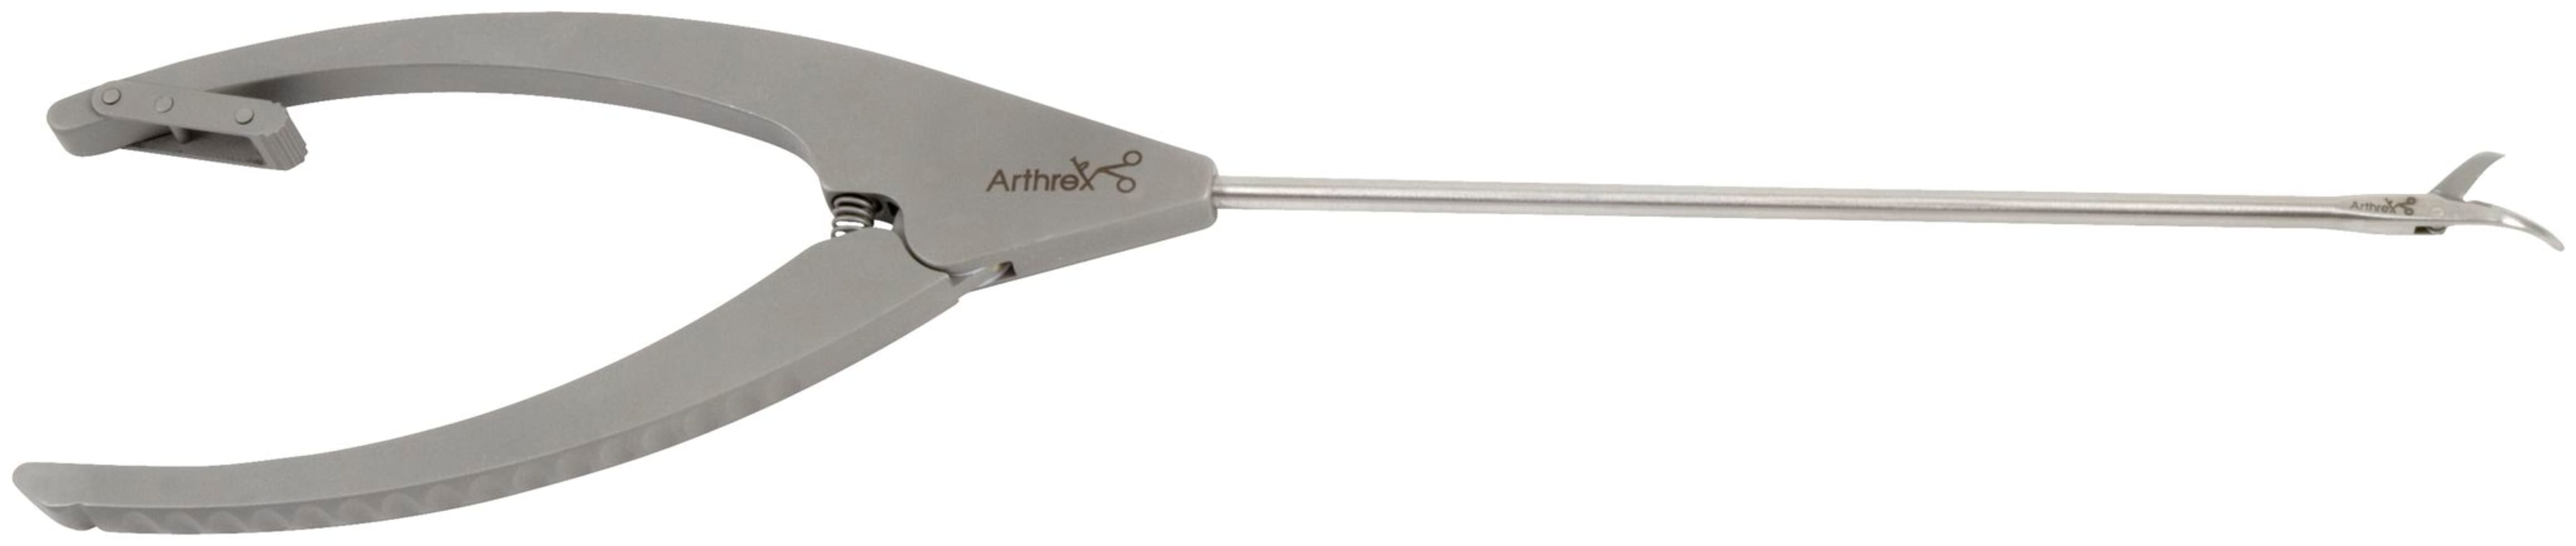 Scissor, Left Curved Tip, ø3.4 mm Straight Shaft w/WishBone Handle